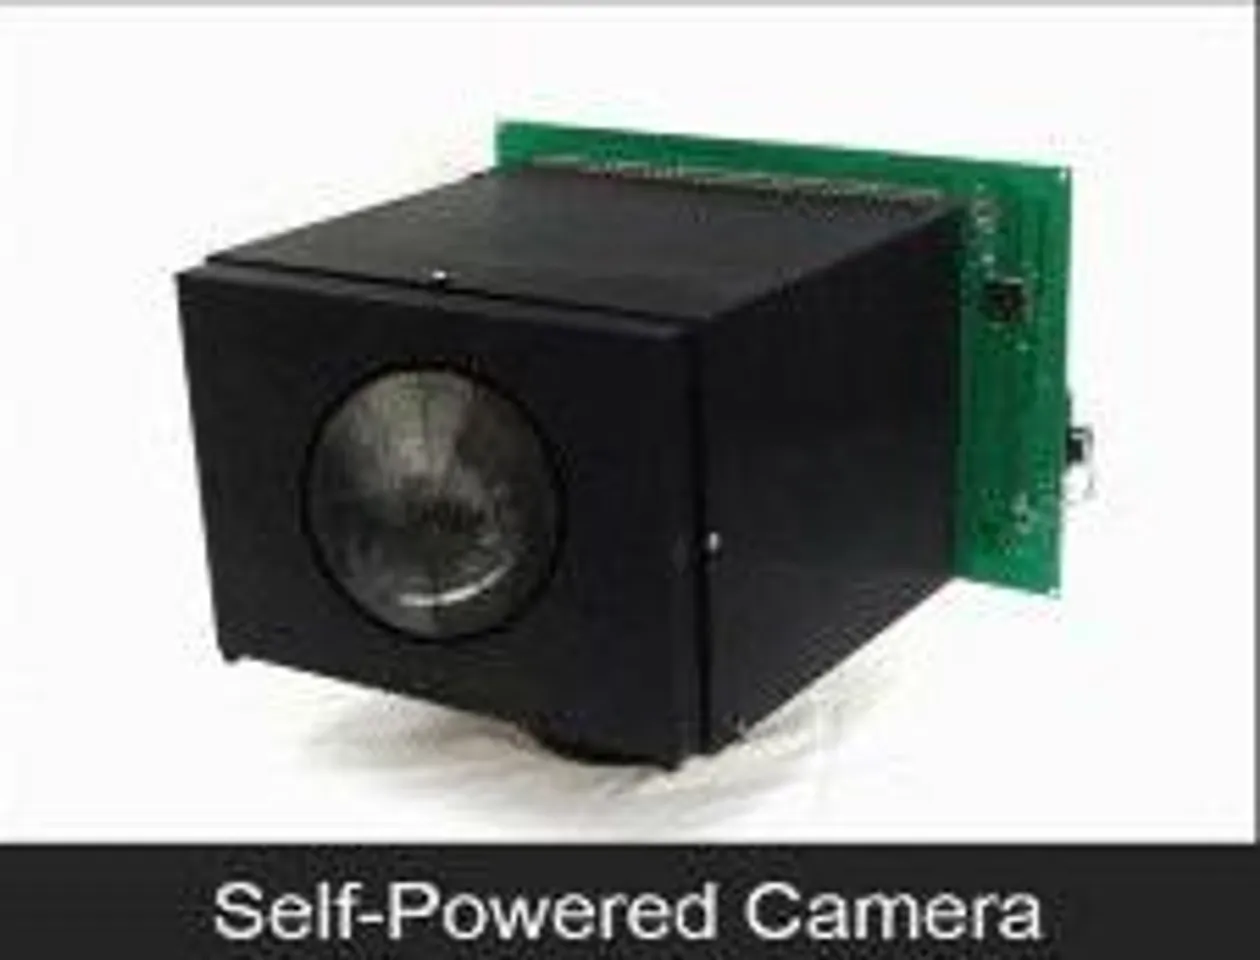 Self powered camera